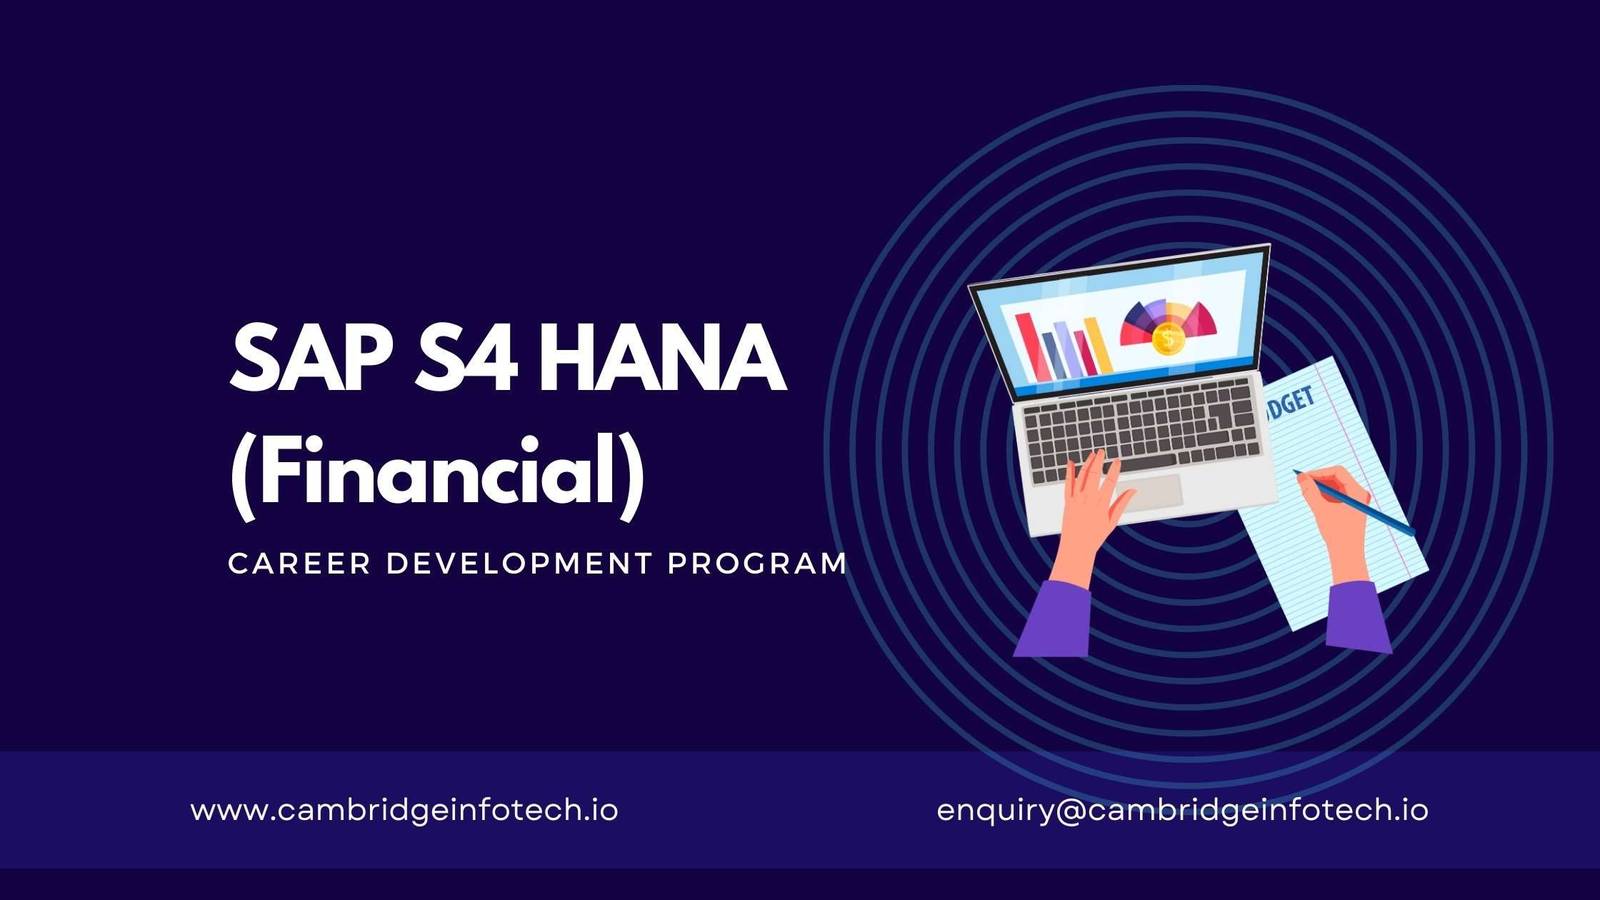 SAP S4 HANA (Financial) - Cambridge Infotech